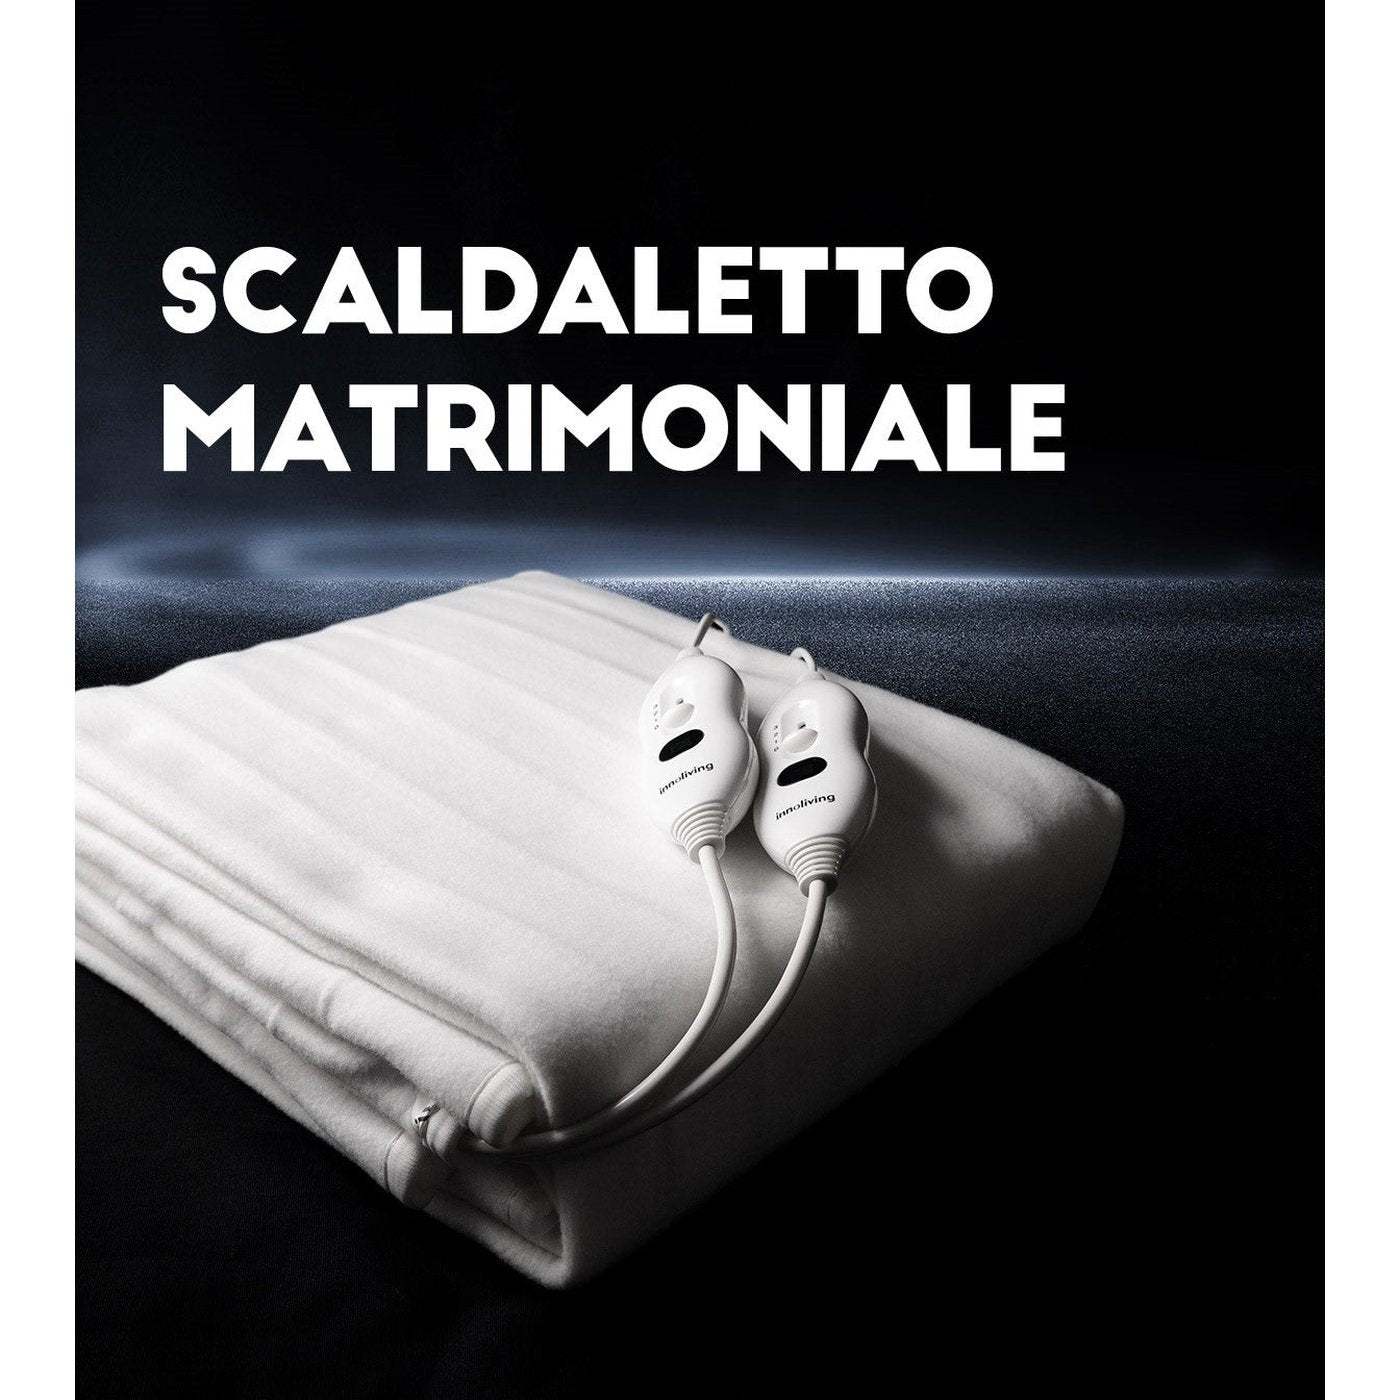 Scaldaletto matrimoniale poliestere 160x140cm 3 temperature, Innoliving INN-065